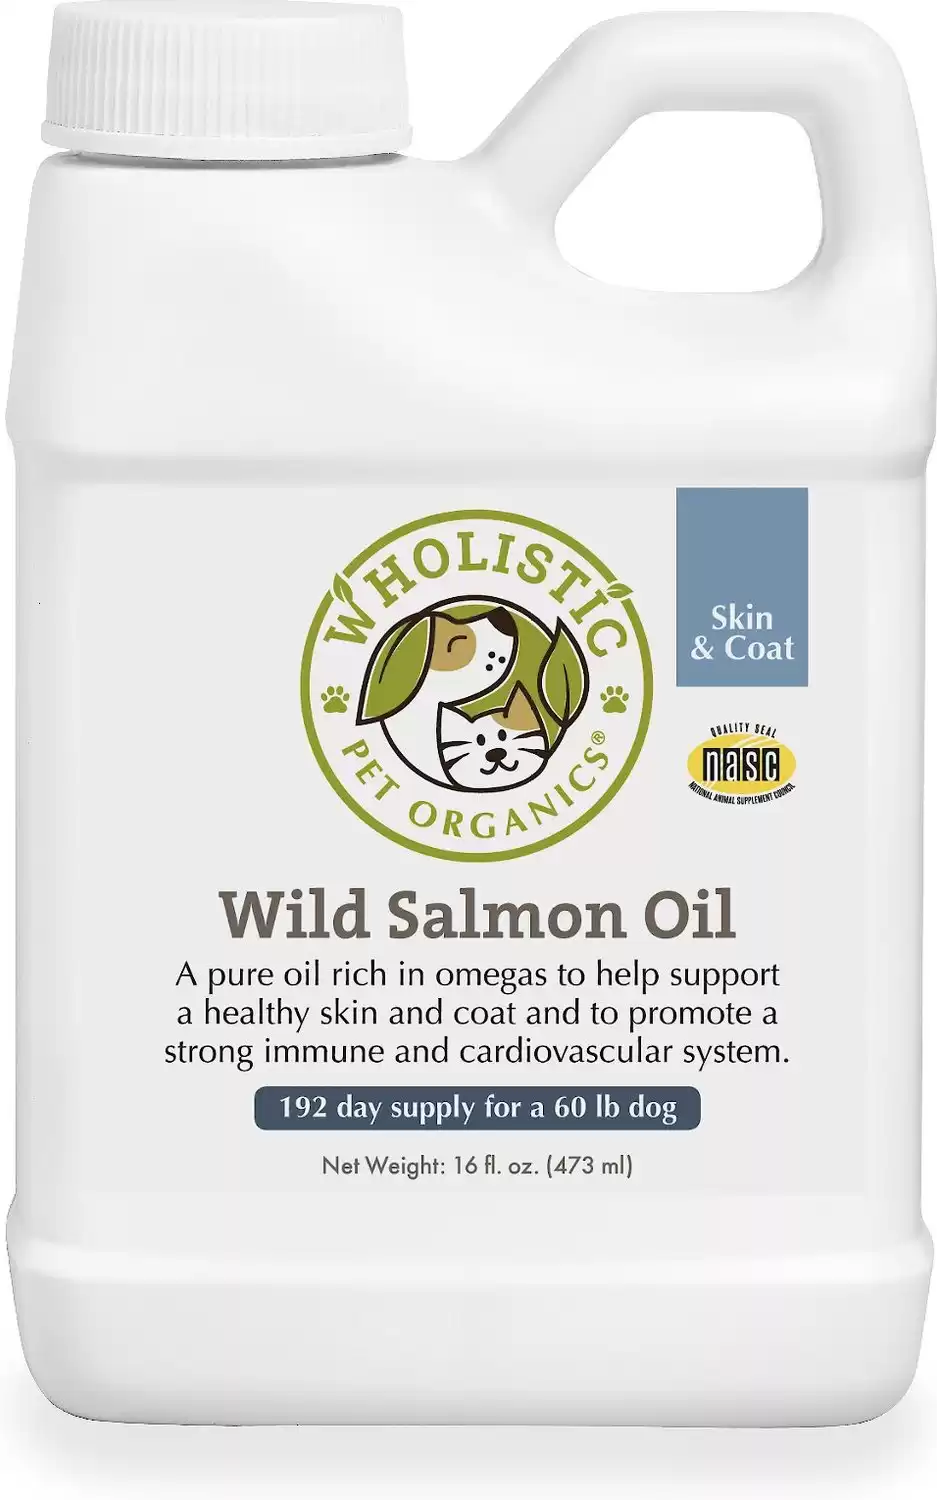 Wholistic Pet Organics Wild Salmon Oil Skin & Coat Supplement